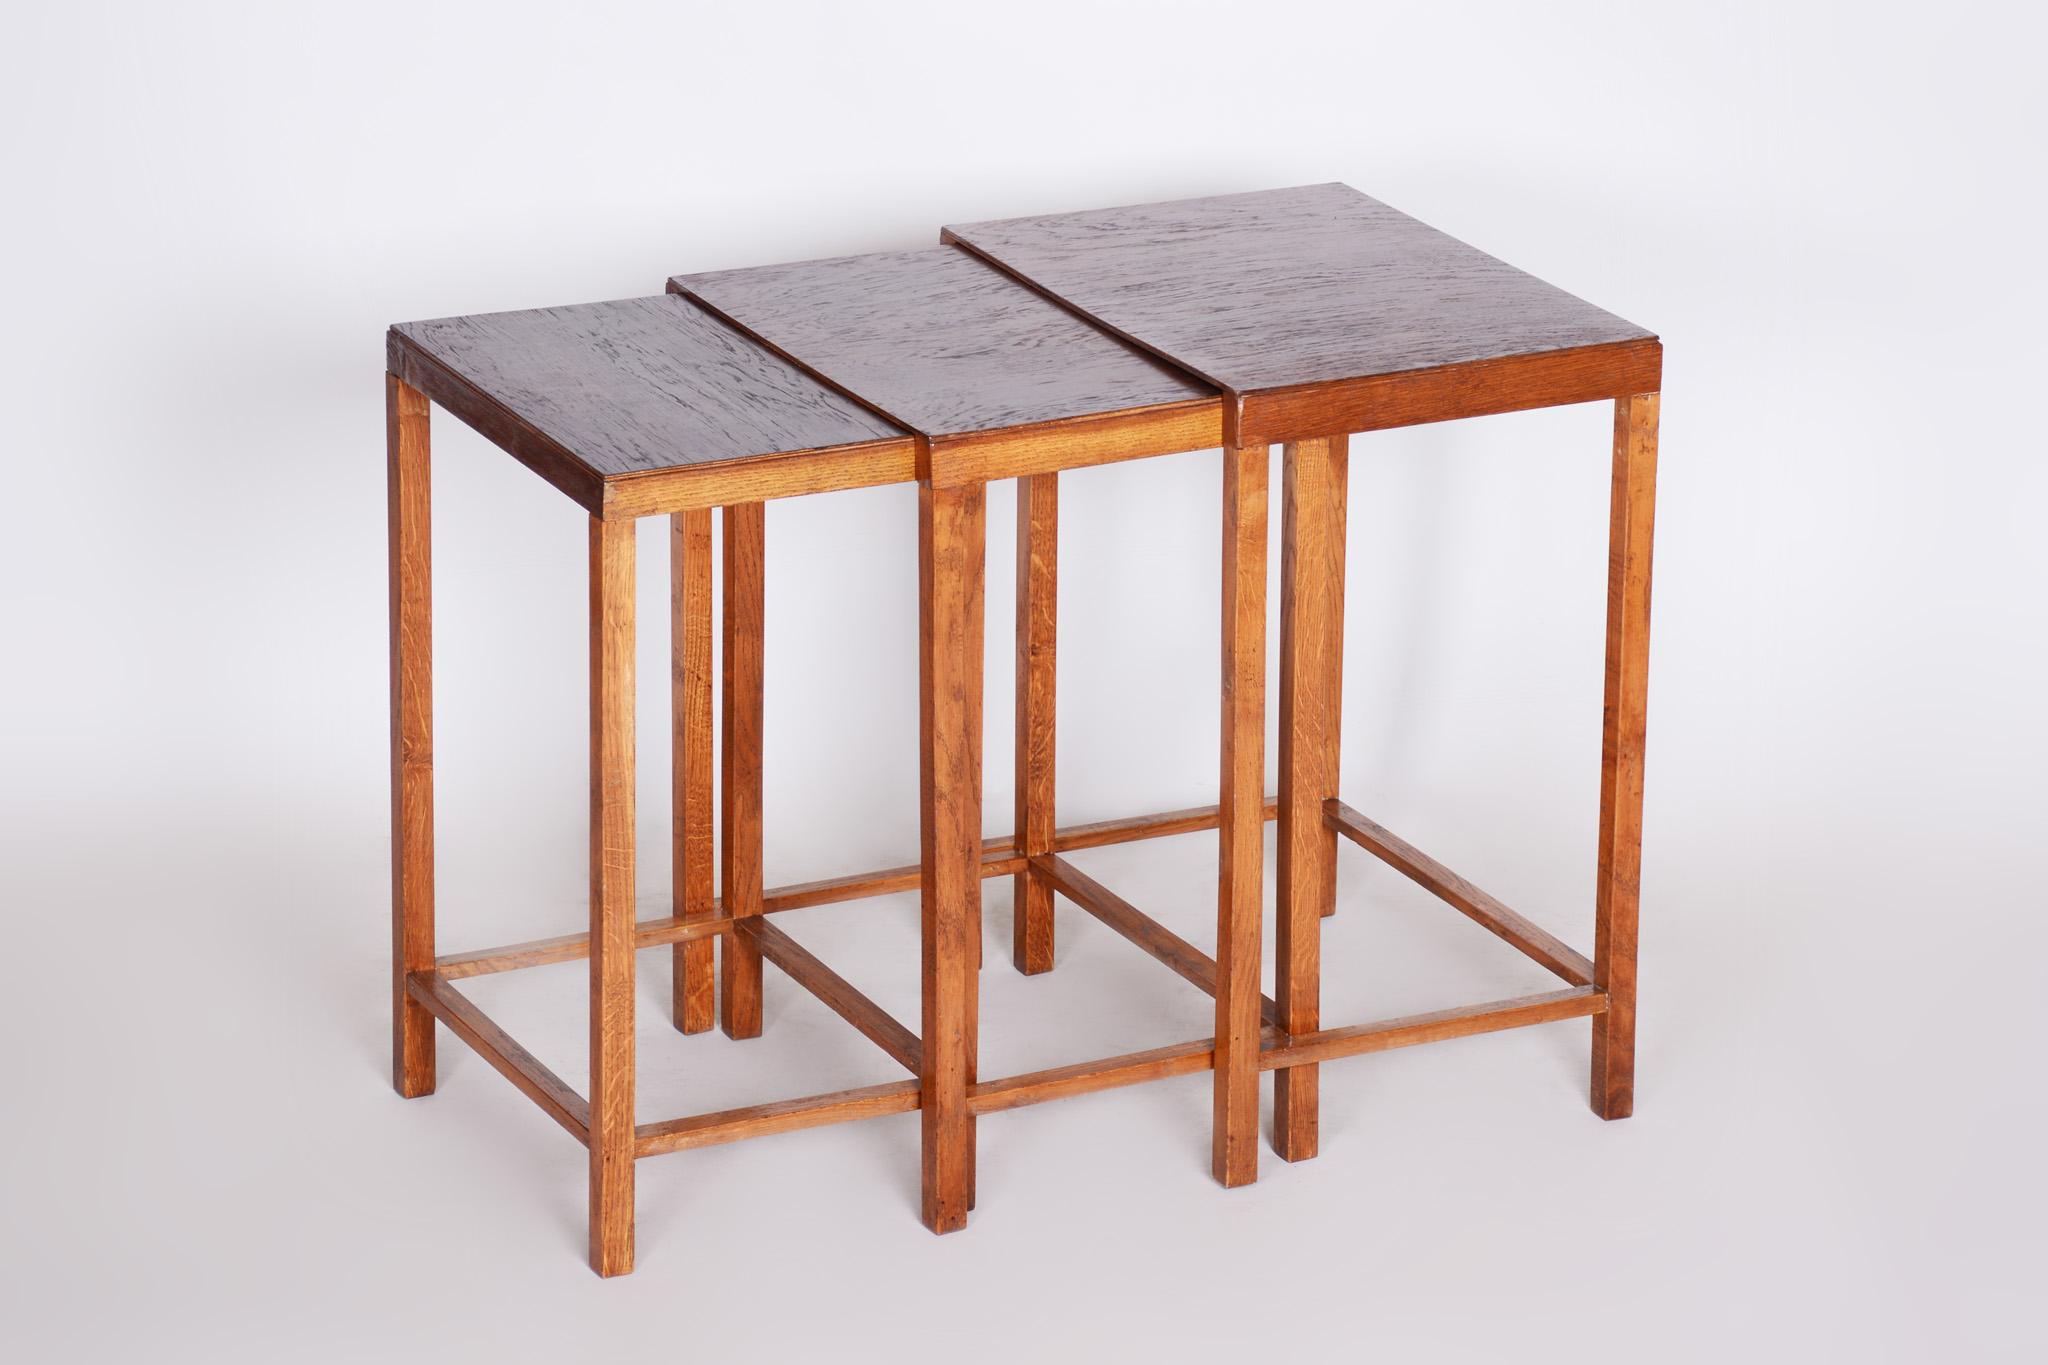 Oak Brown Jan Vanek Nest Tables Made in 1930s Czechia, Art Deco  For Sale